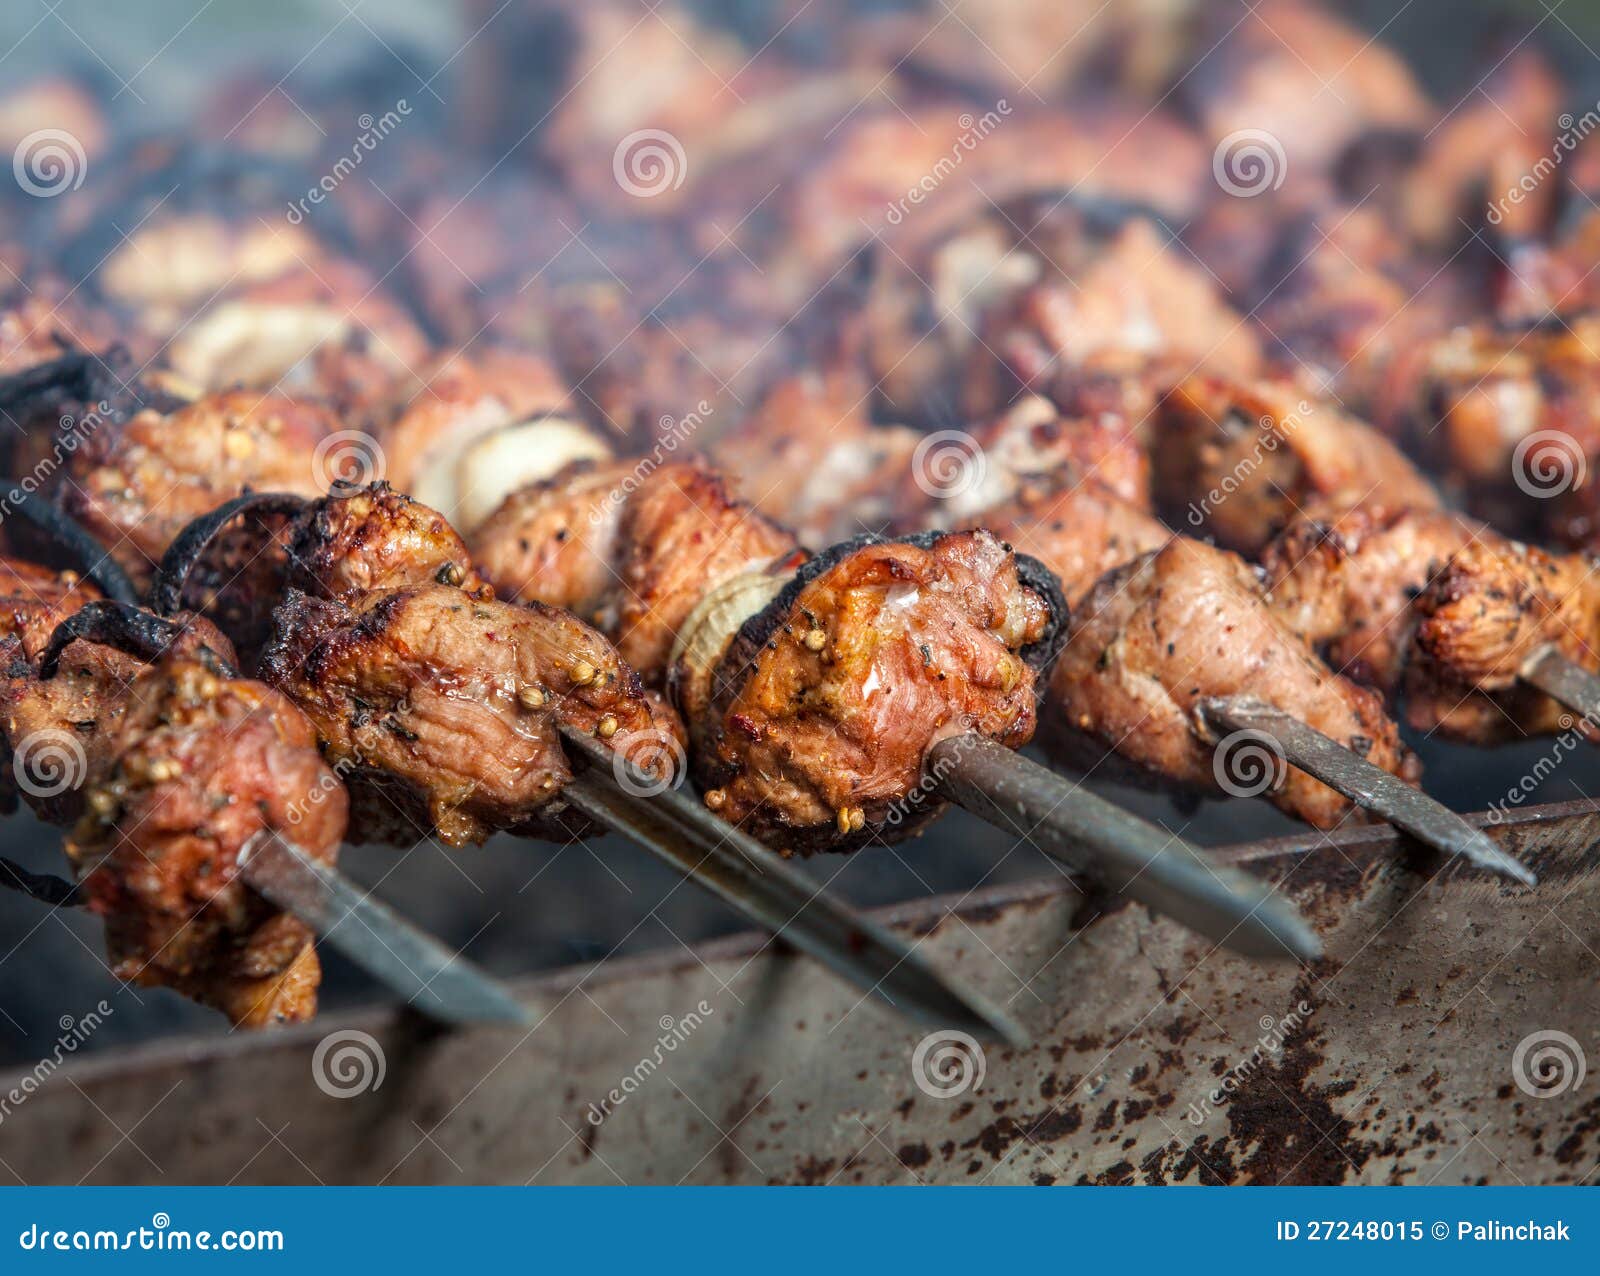 Shish kebab stock image. Image of kitchen, calf, health - 27248015